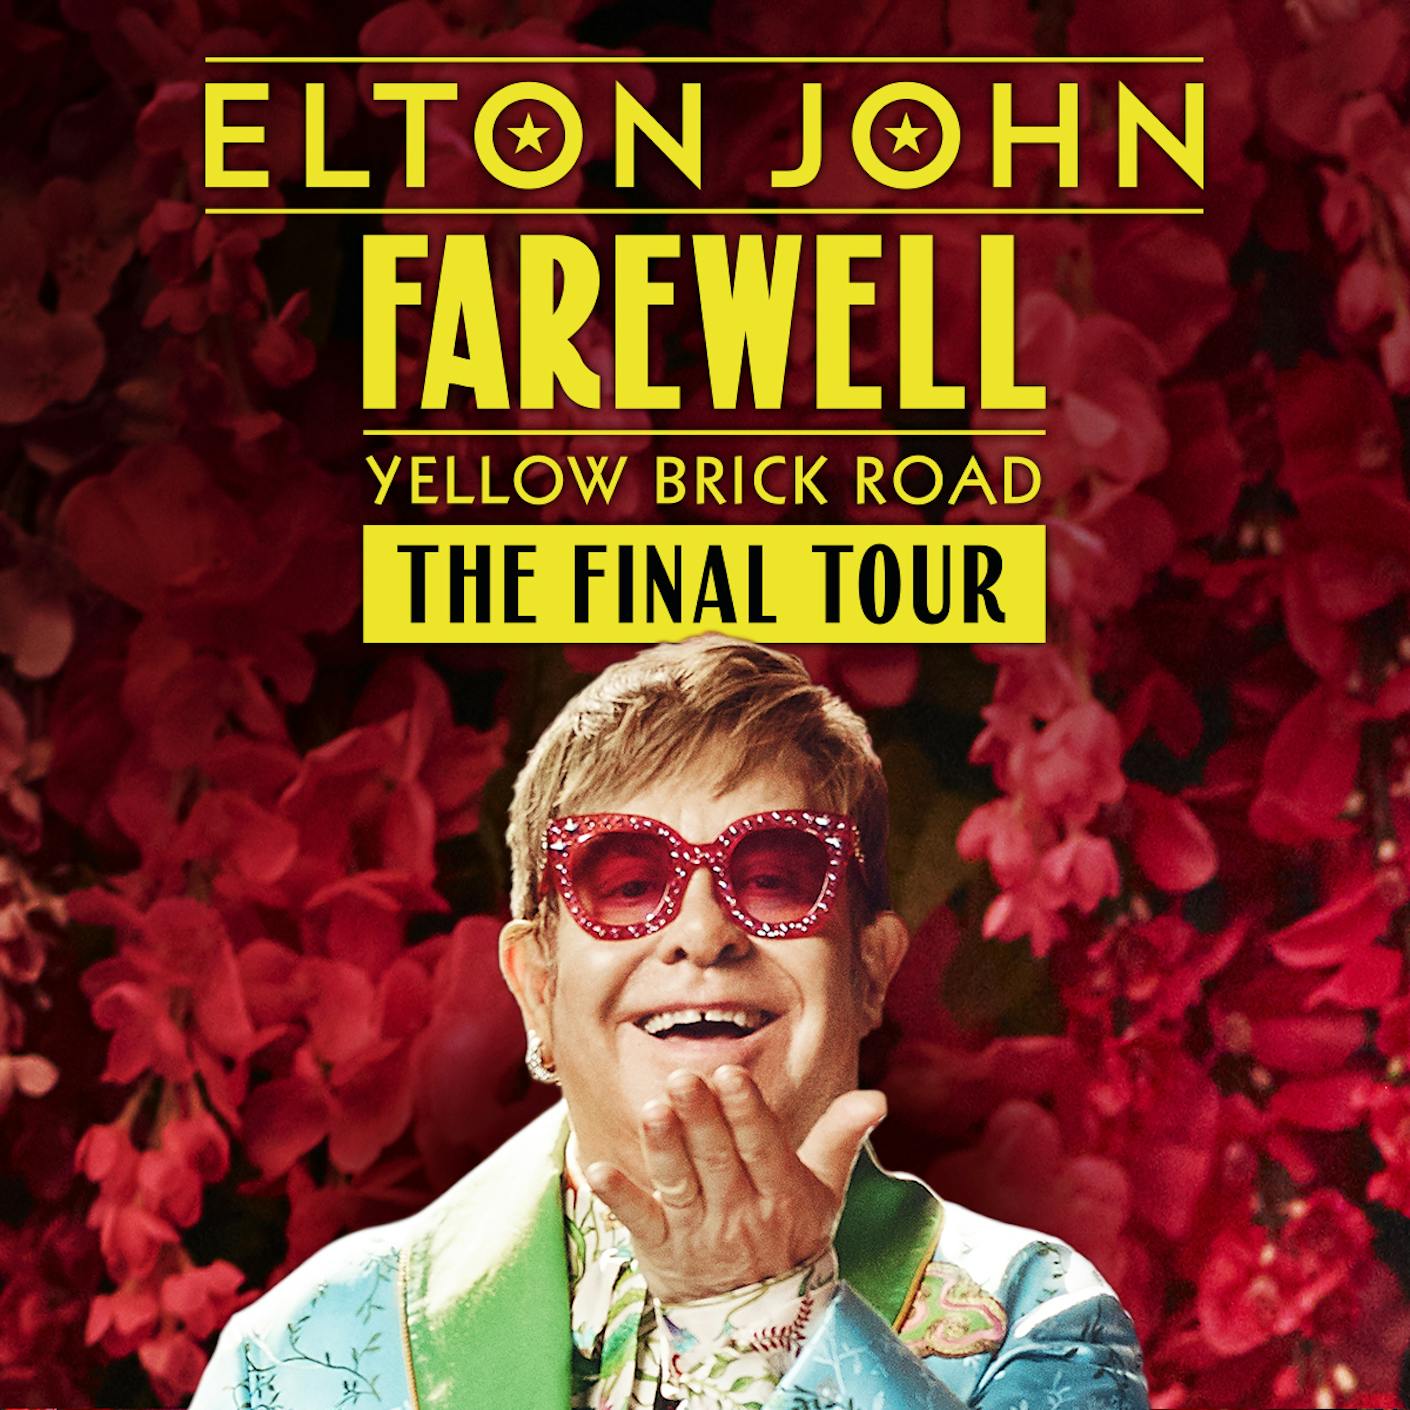 elton john farewell tour barcelona